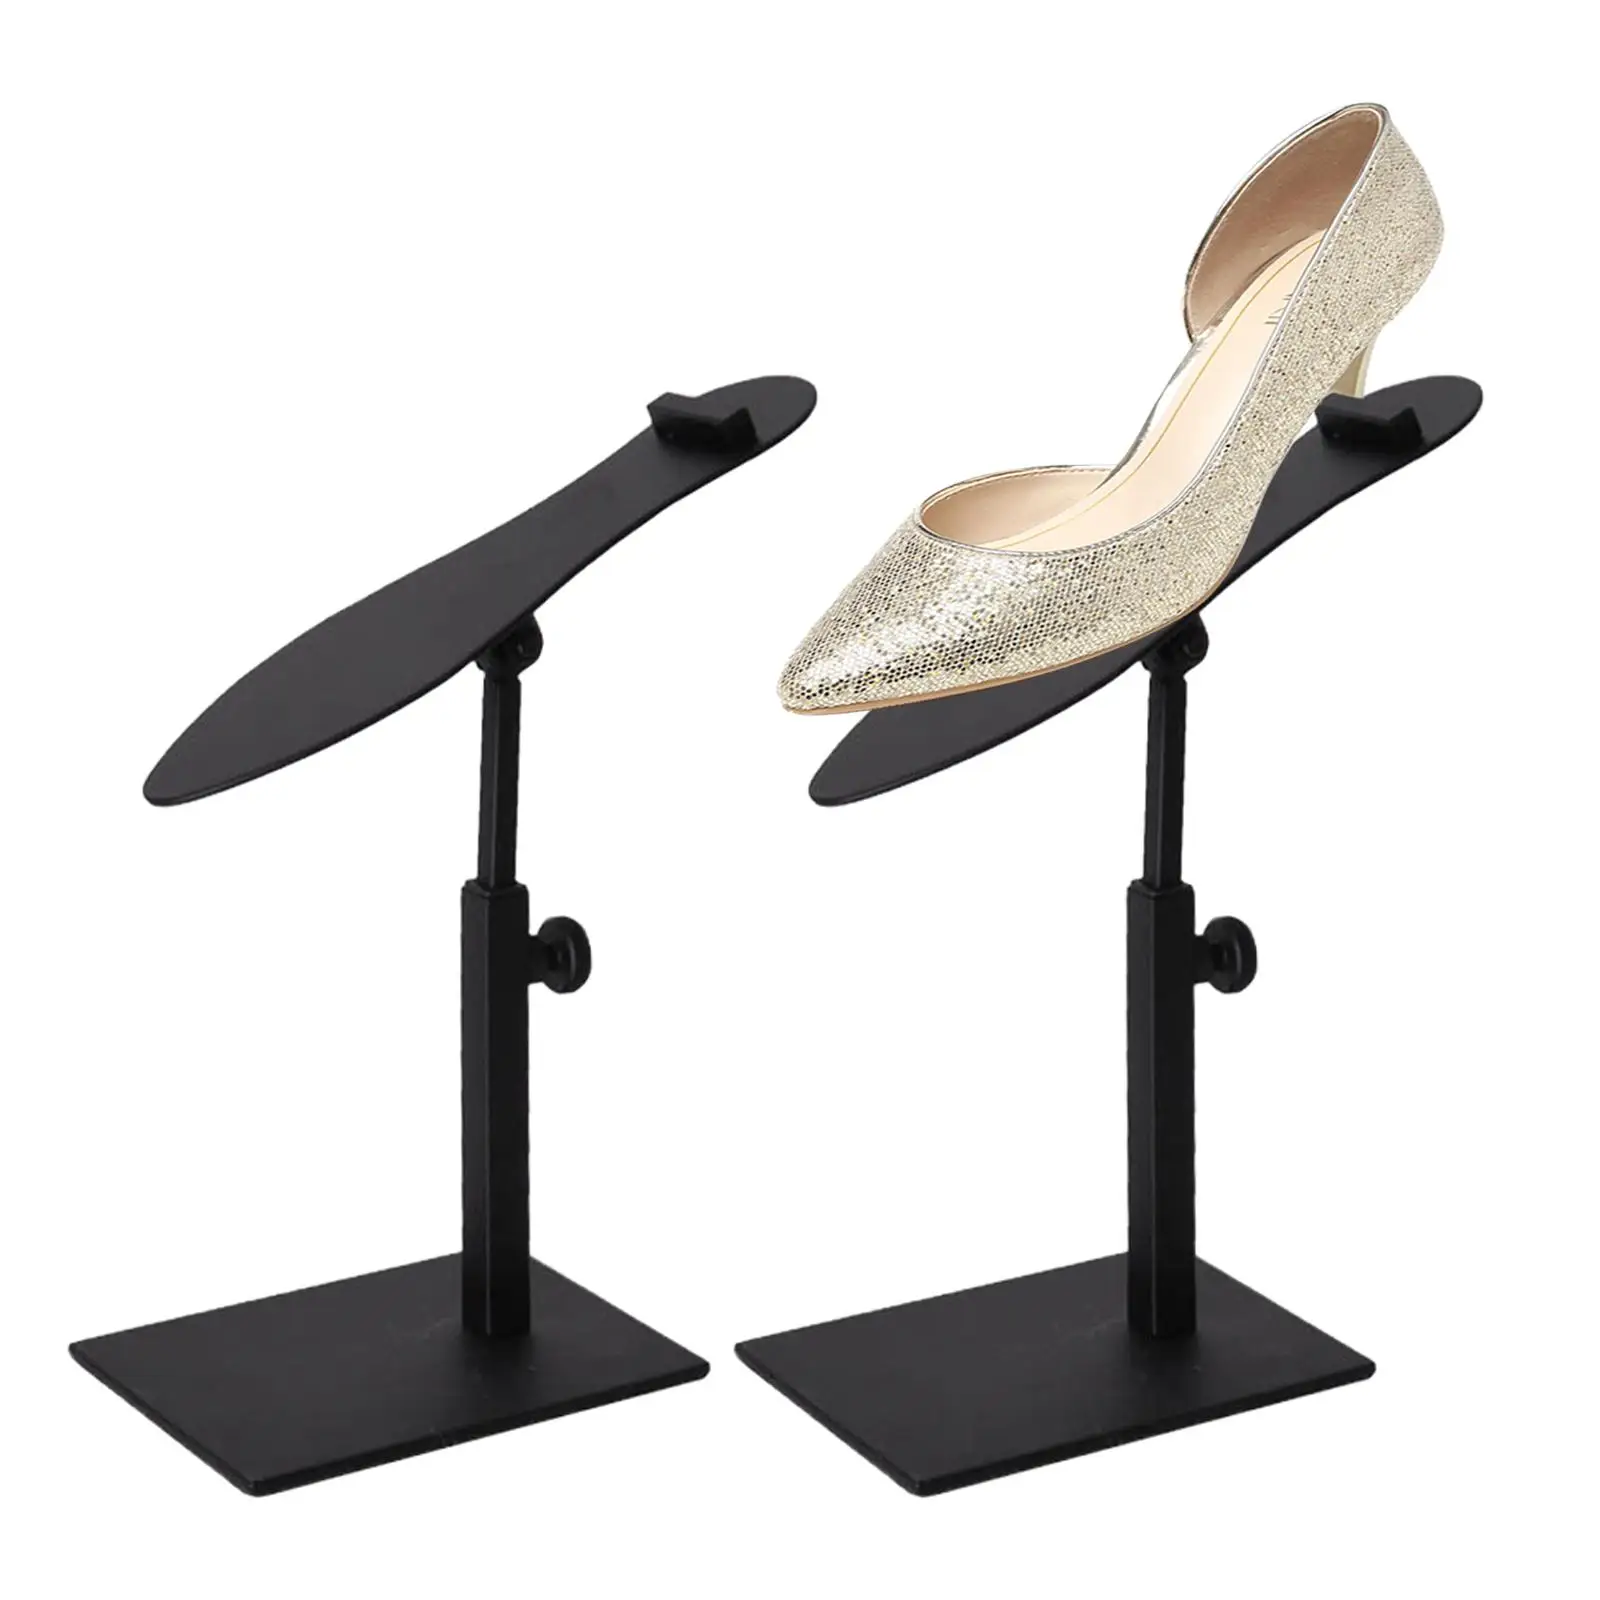 Shoe Display Stand Adjustable Height Simple High Heel Shoe Display Shelf for Desktop Retail Supply Countertop Store Commercial